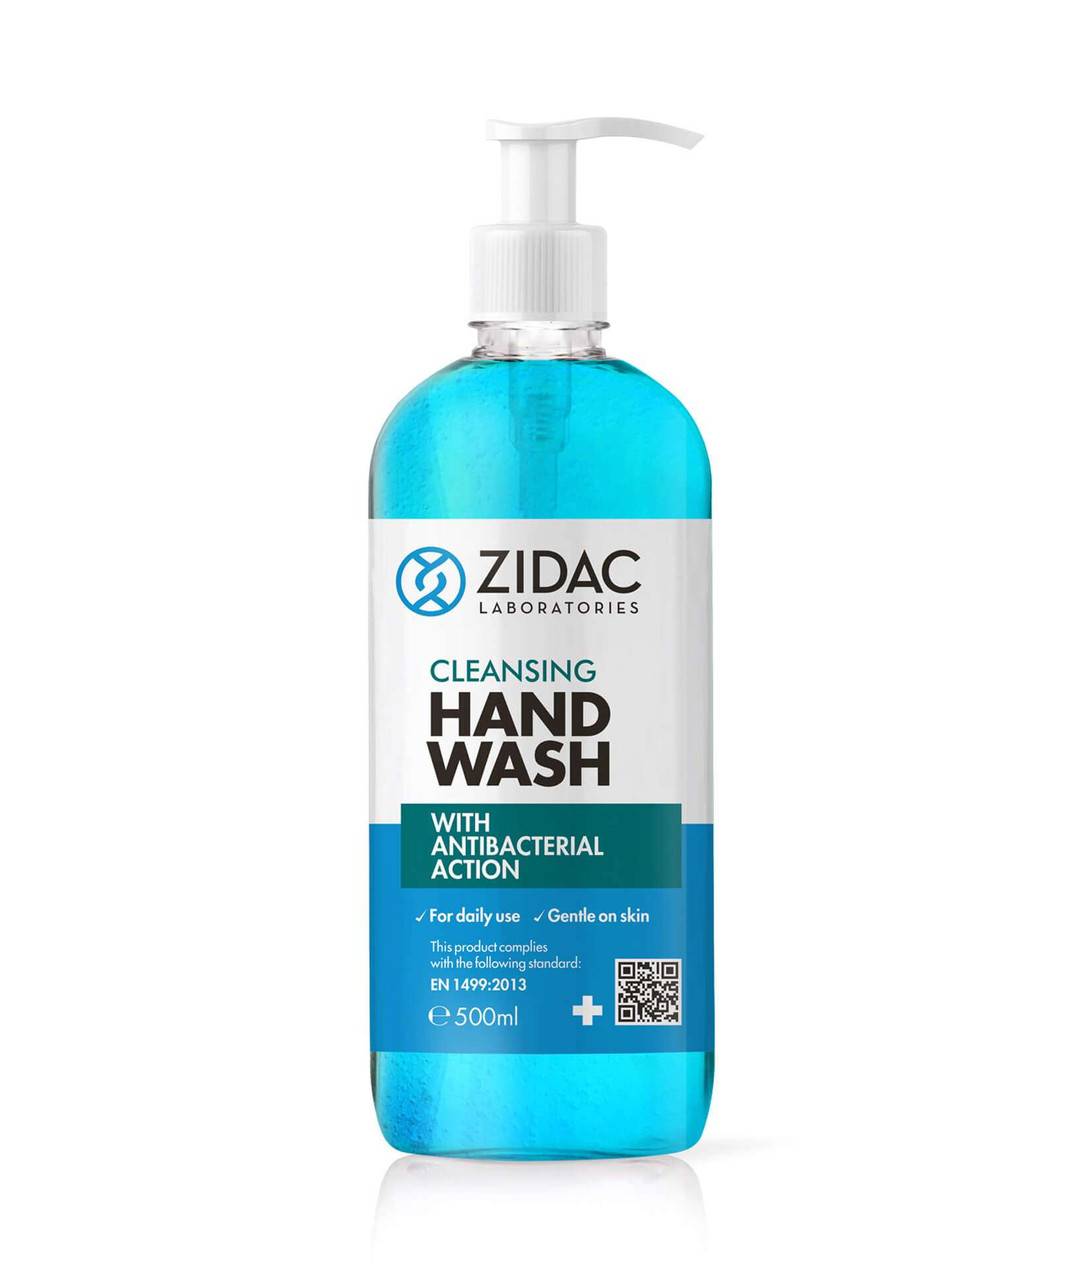 Zidac - 500ml Zidac Cleansing Antibacterial Handwash - 5060748720290 UKMEDI.CO.UK UK Medical Supplies